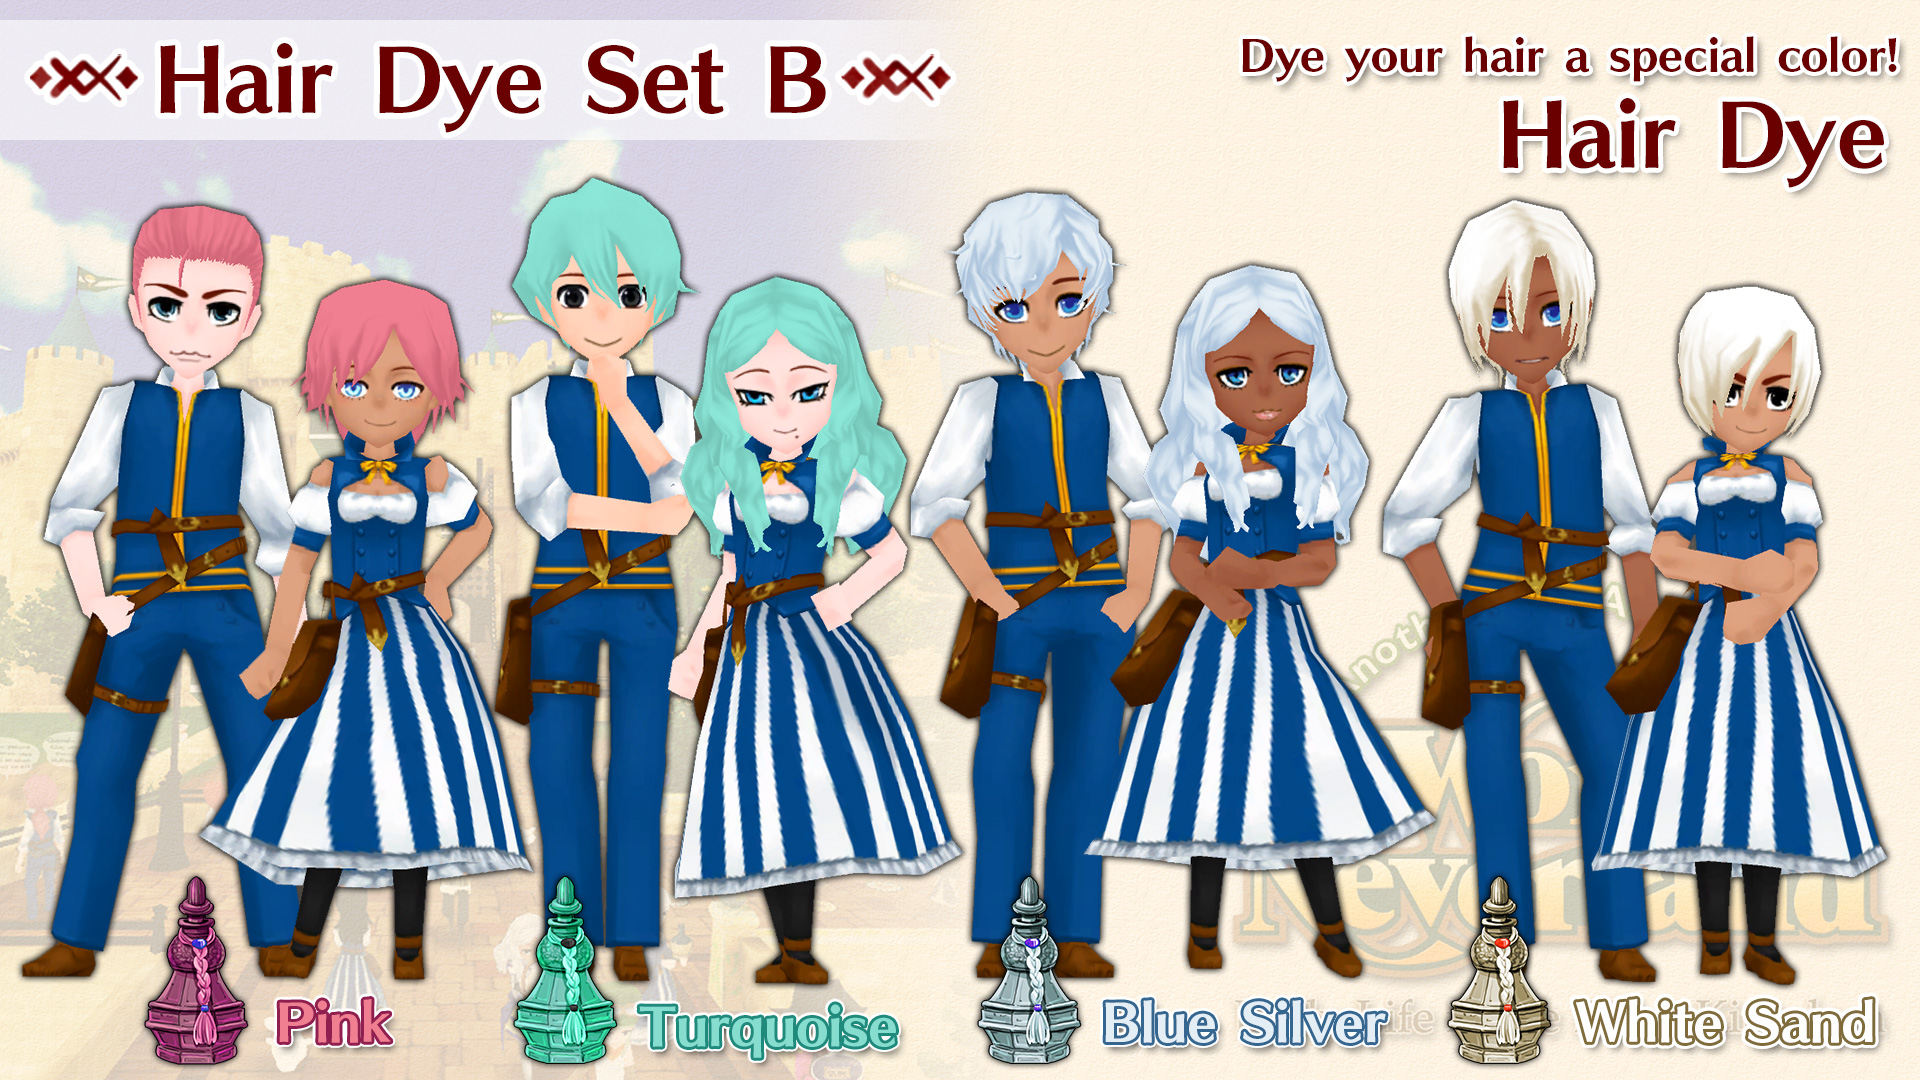 Hair Dye Set B (Pink, Turquoise, Blue Silver, White Sand)